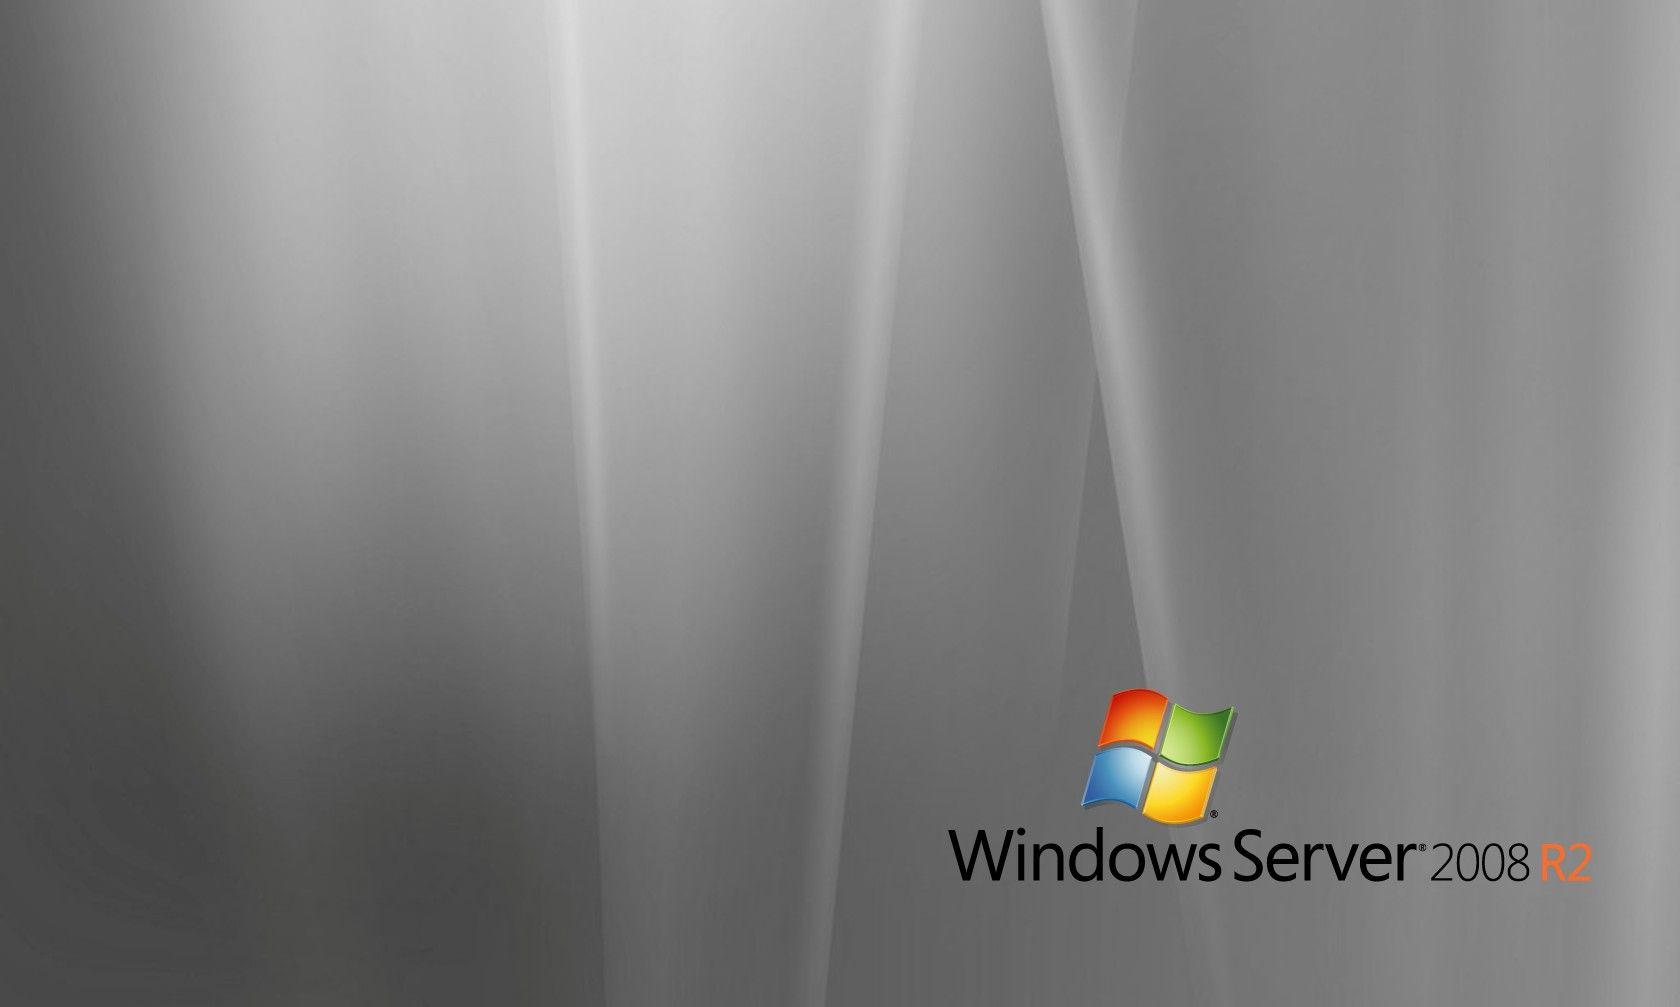 Windows Server 2008 R2 Wallpaper